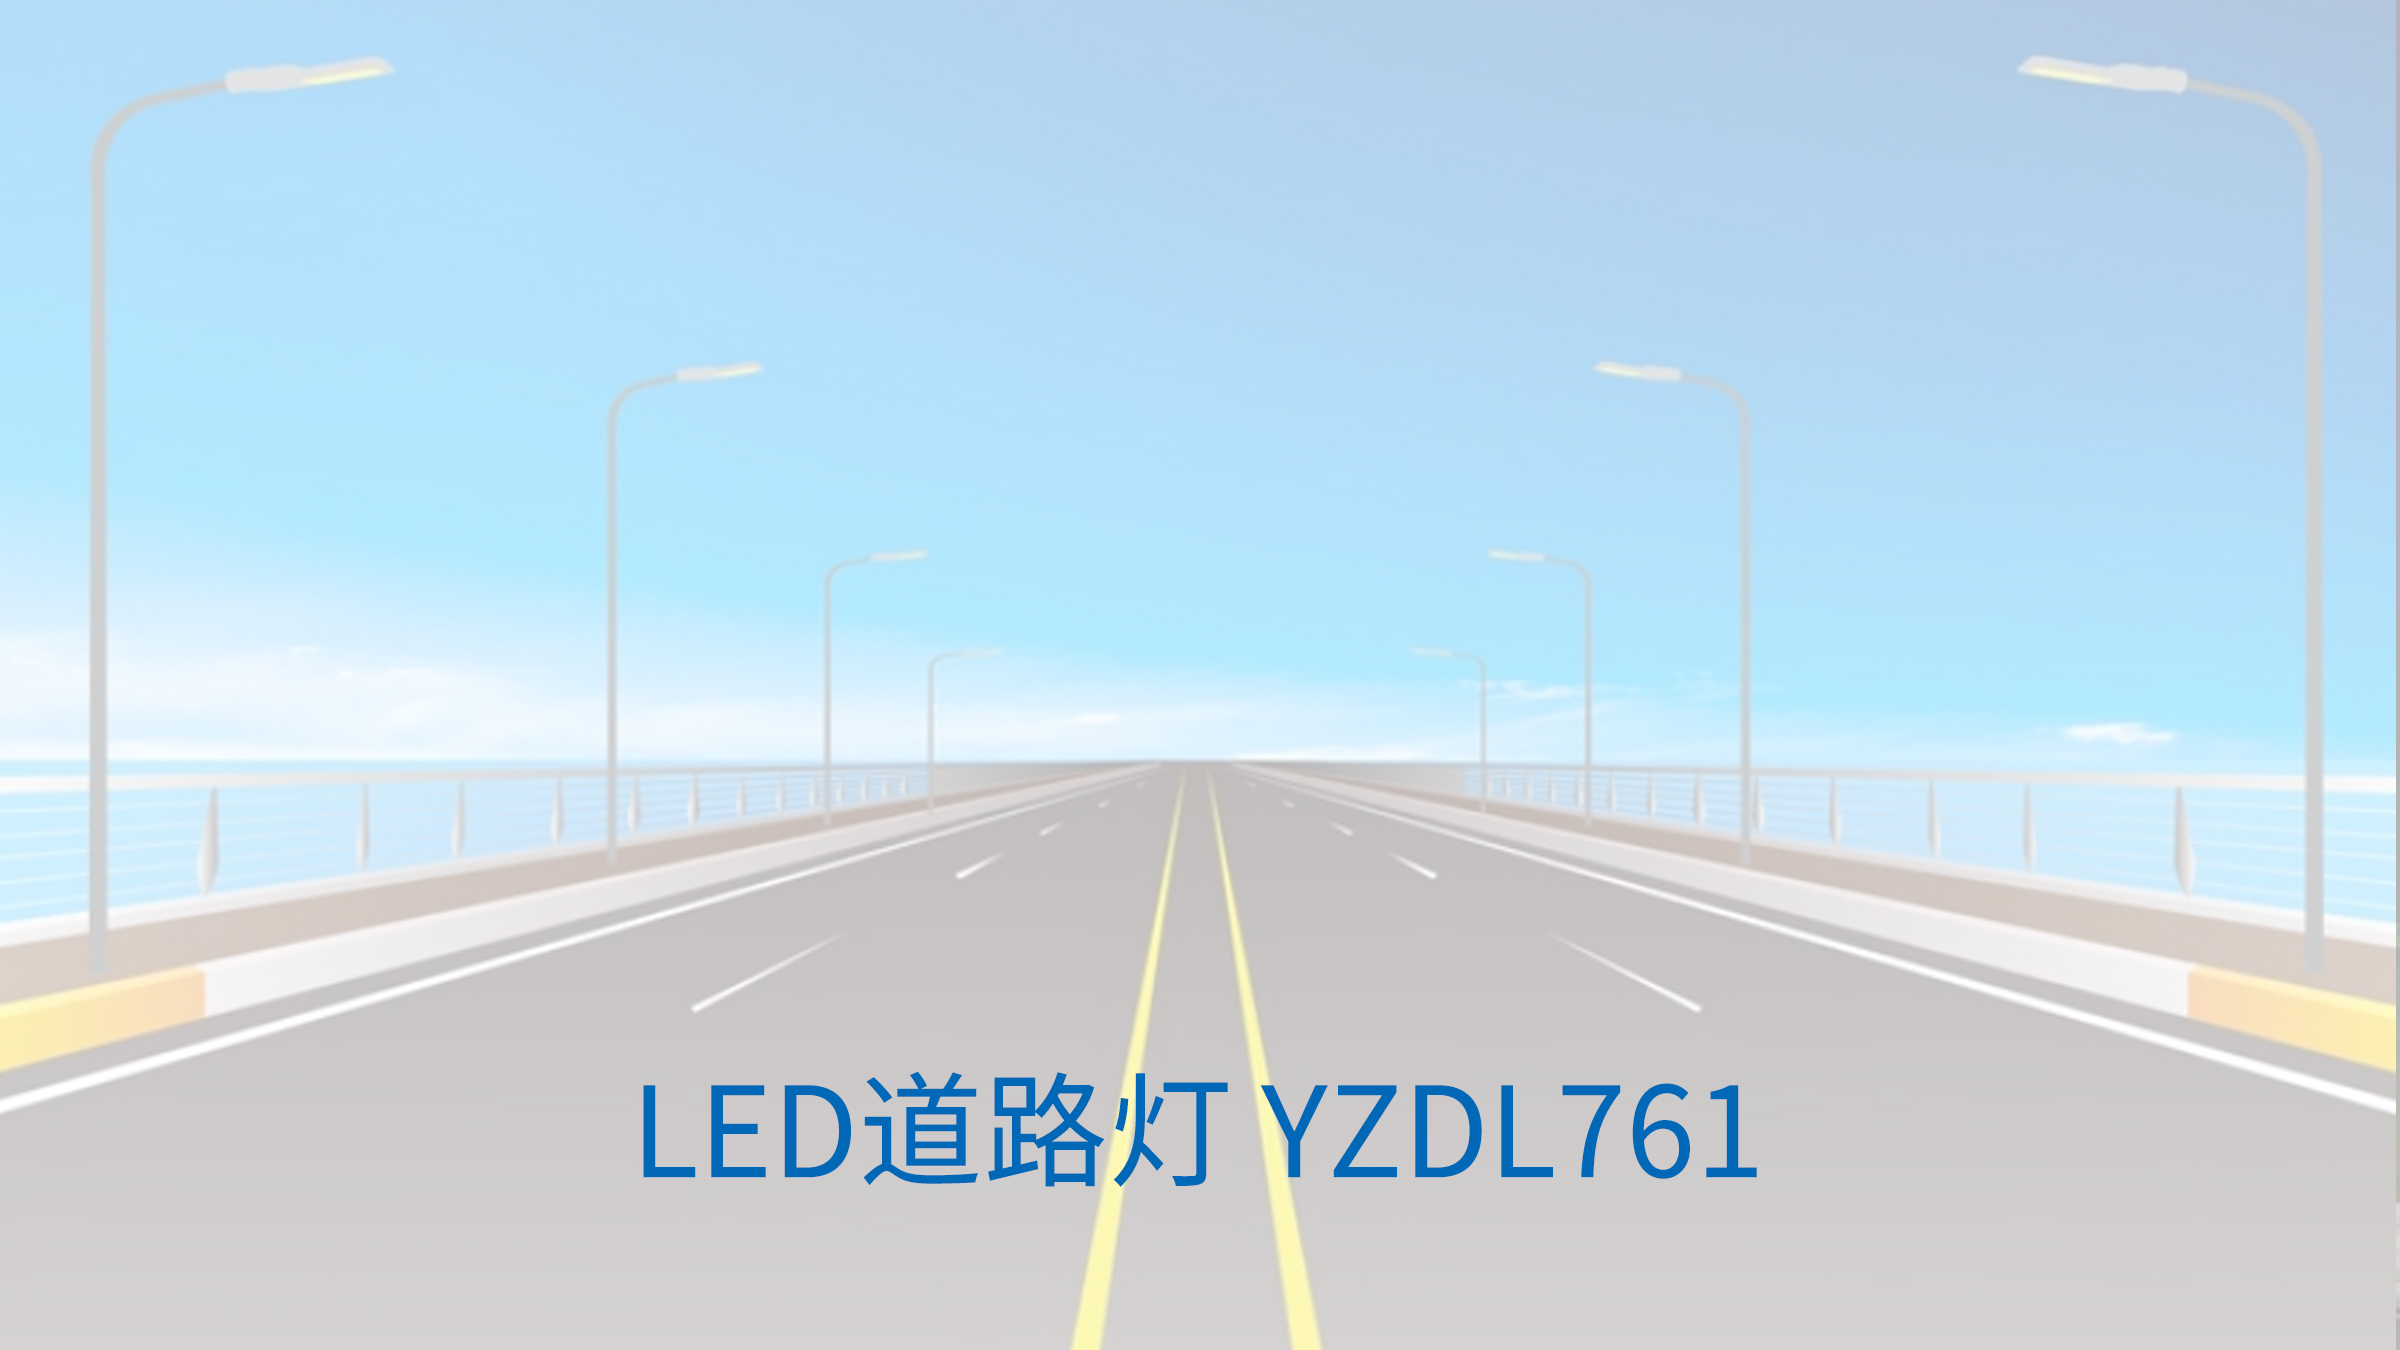 LED道路灯 YZDL761.jpg